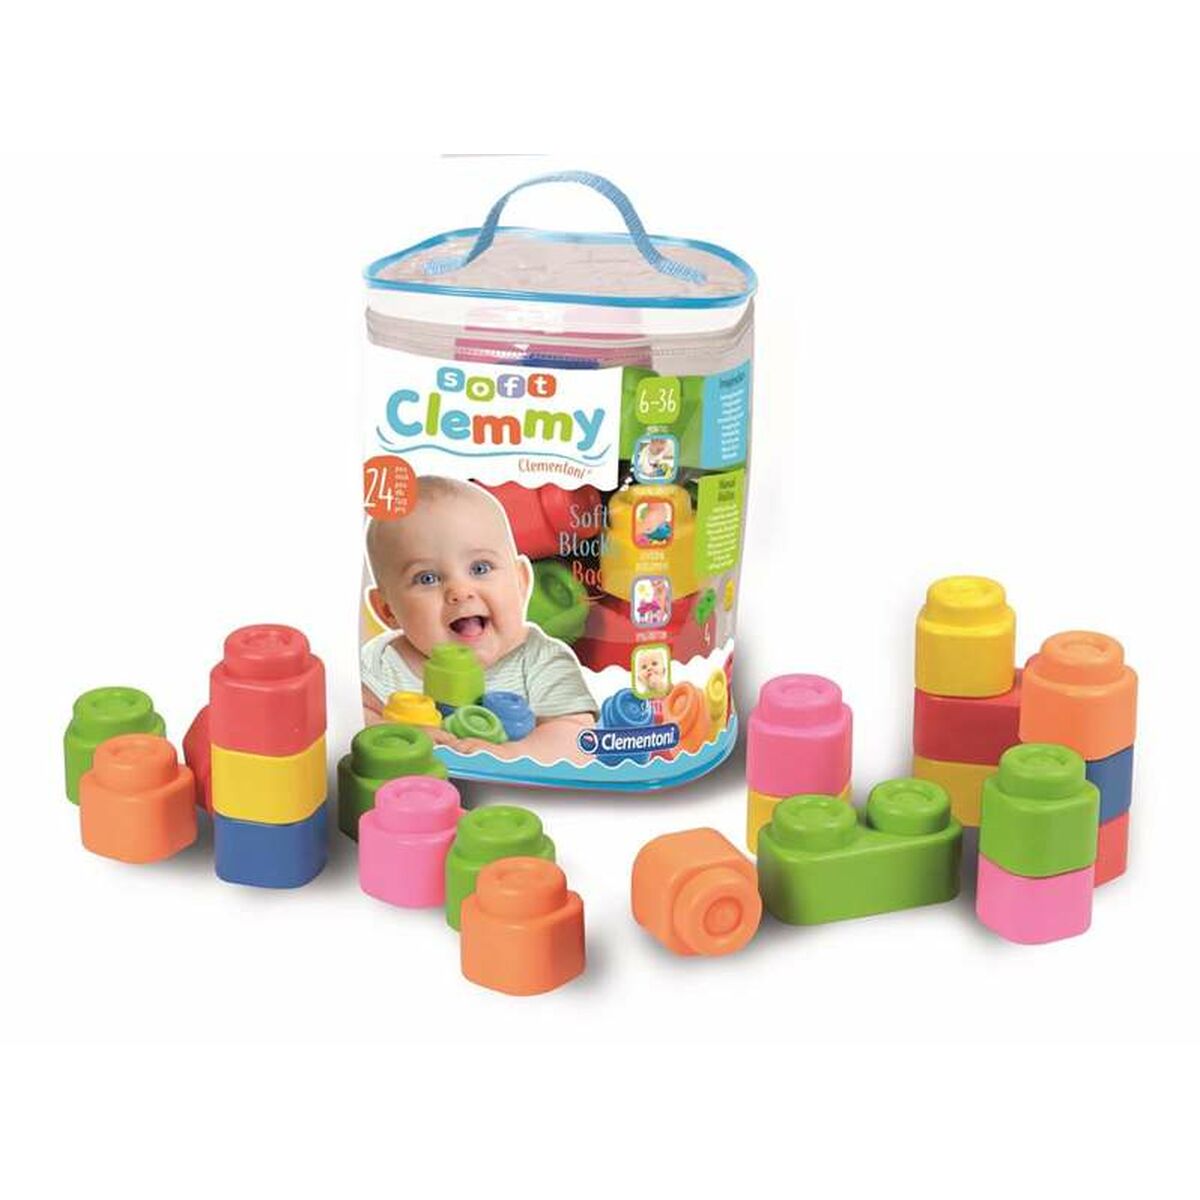 Gioco di Costruzioni con Blocchi Baby Clemmy Clementoni Baby Clemmy (24 pcs) (13 x 20,5 x 26,5 cm)